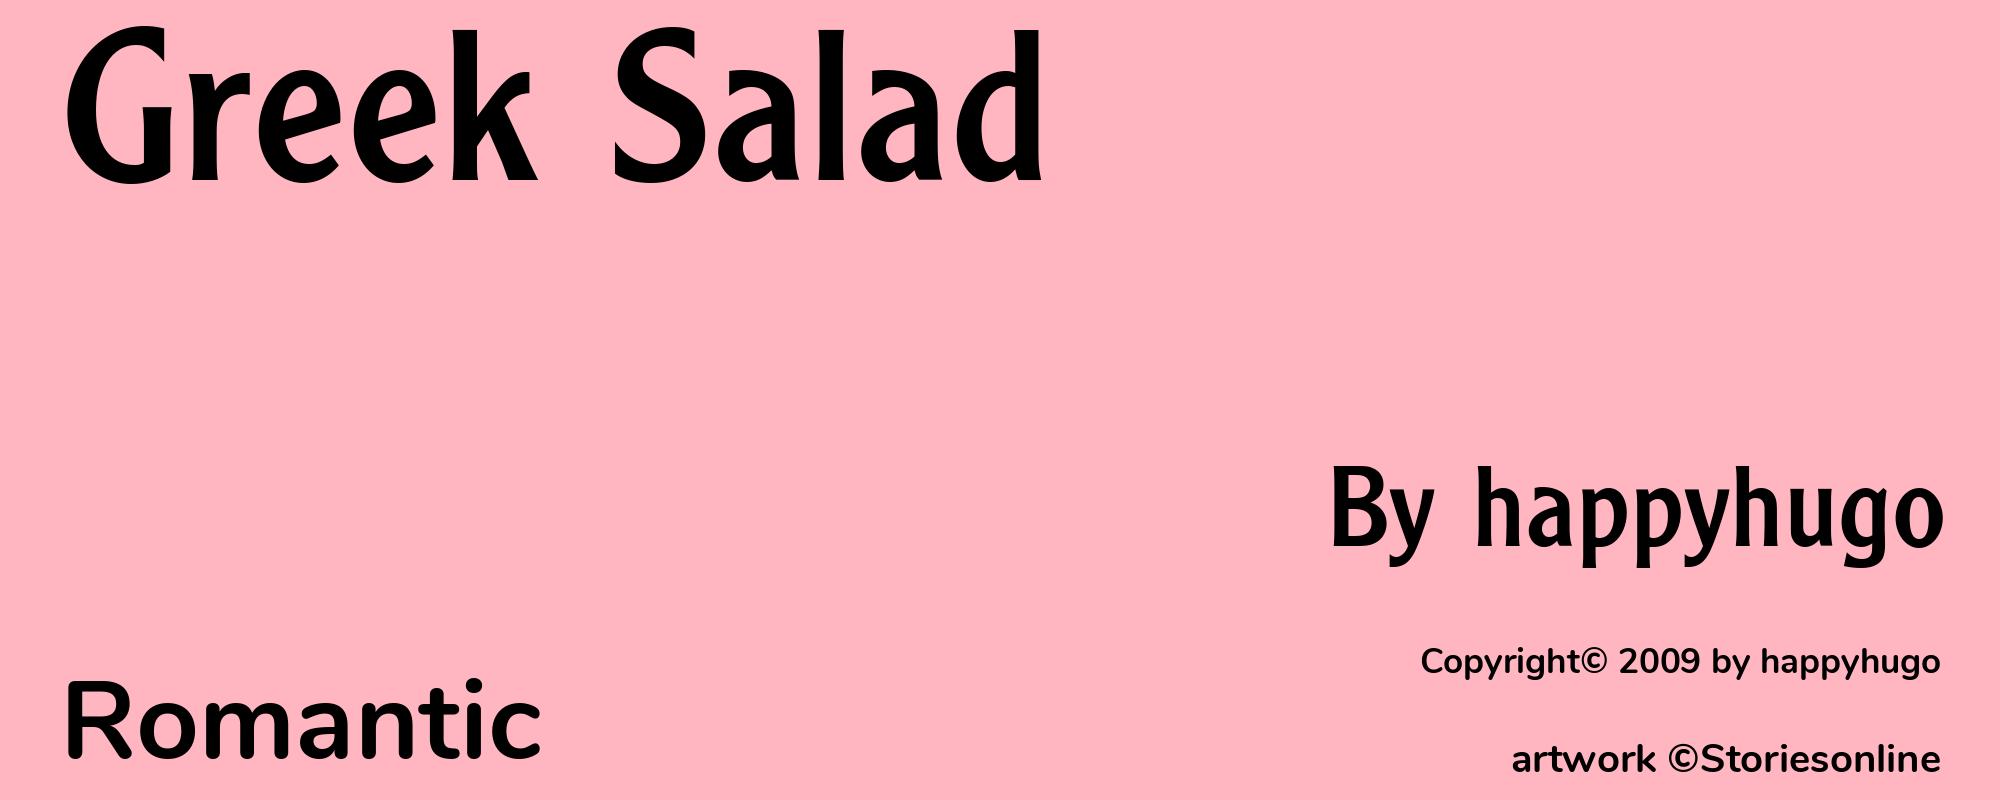 Greek Salad - Cover